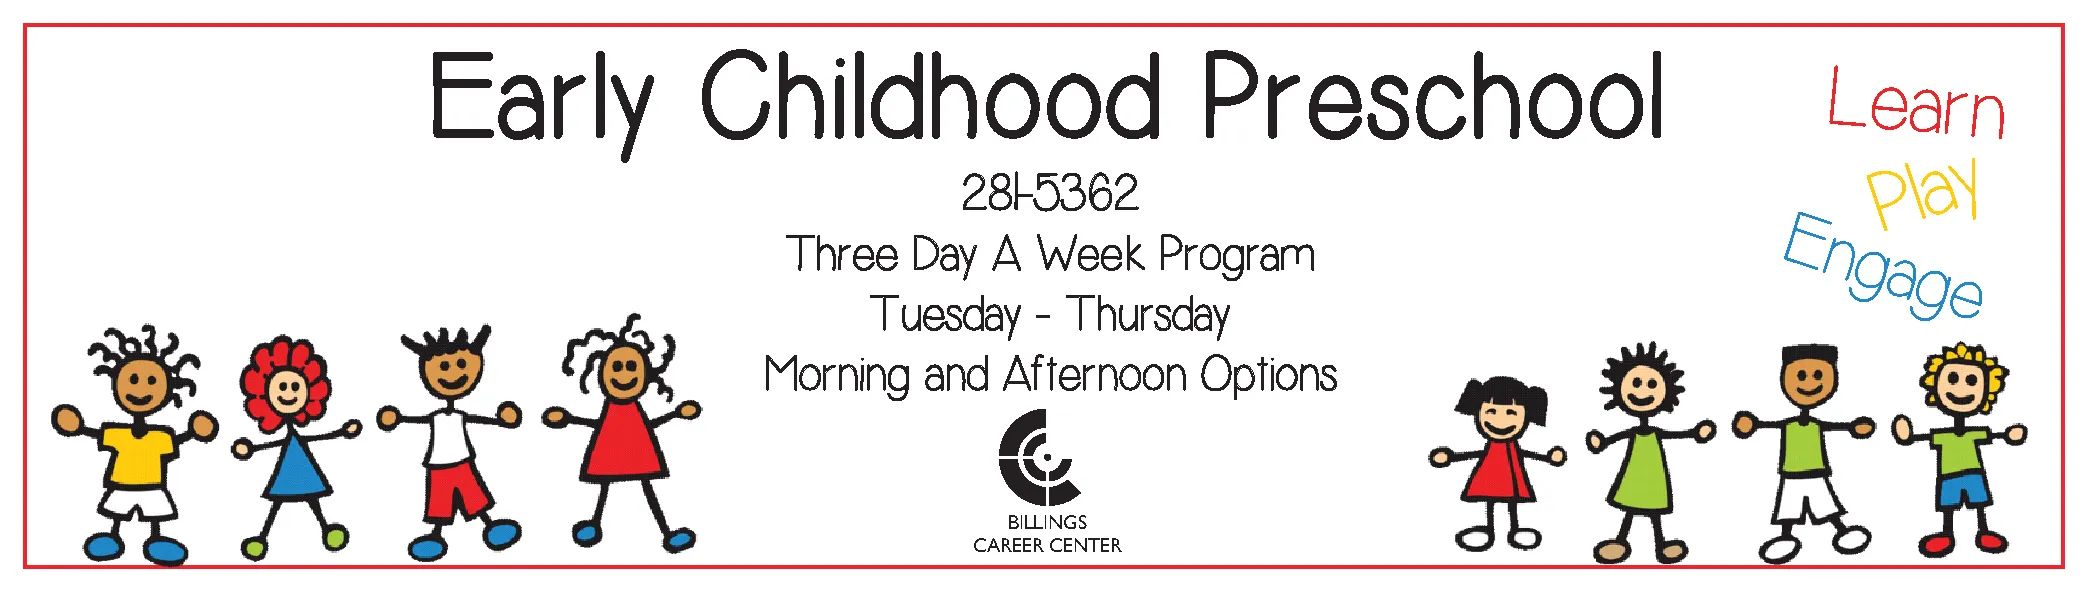 Billings Career Center Early Childhood Preschool